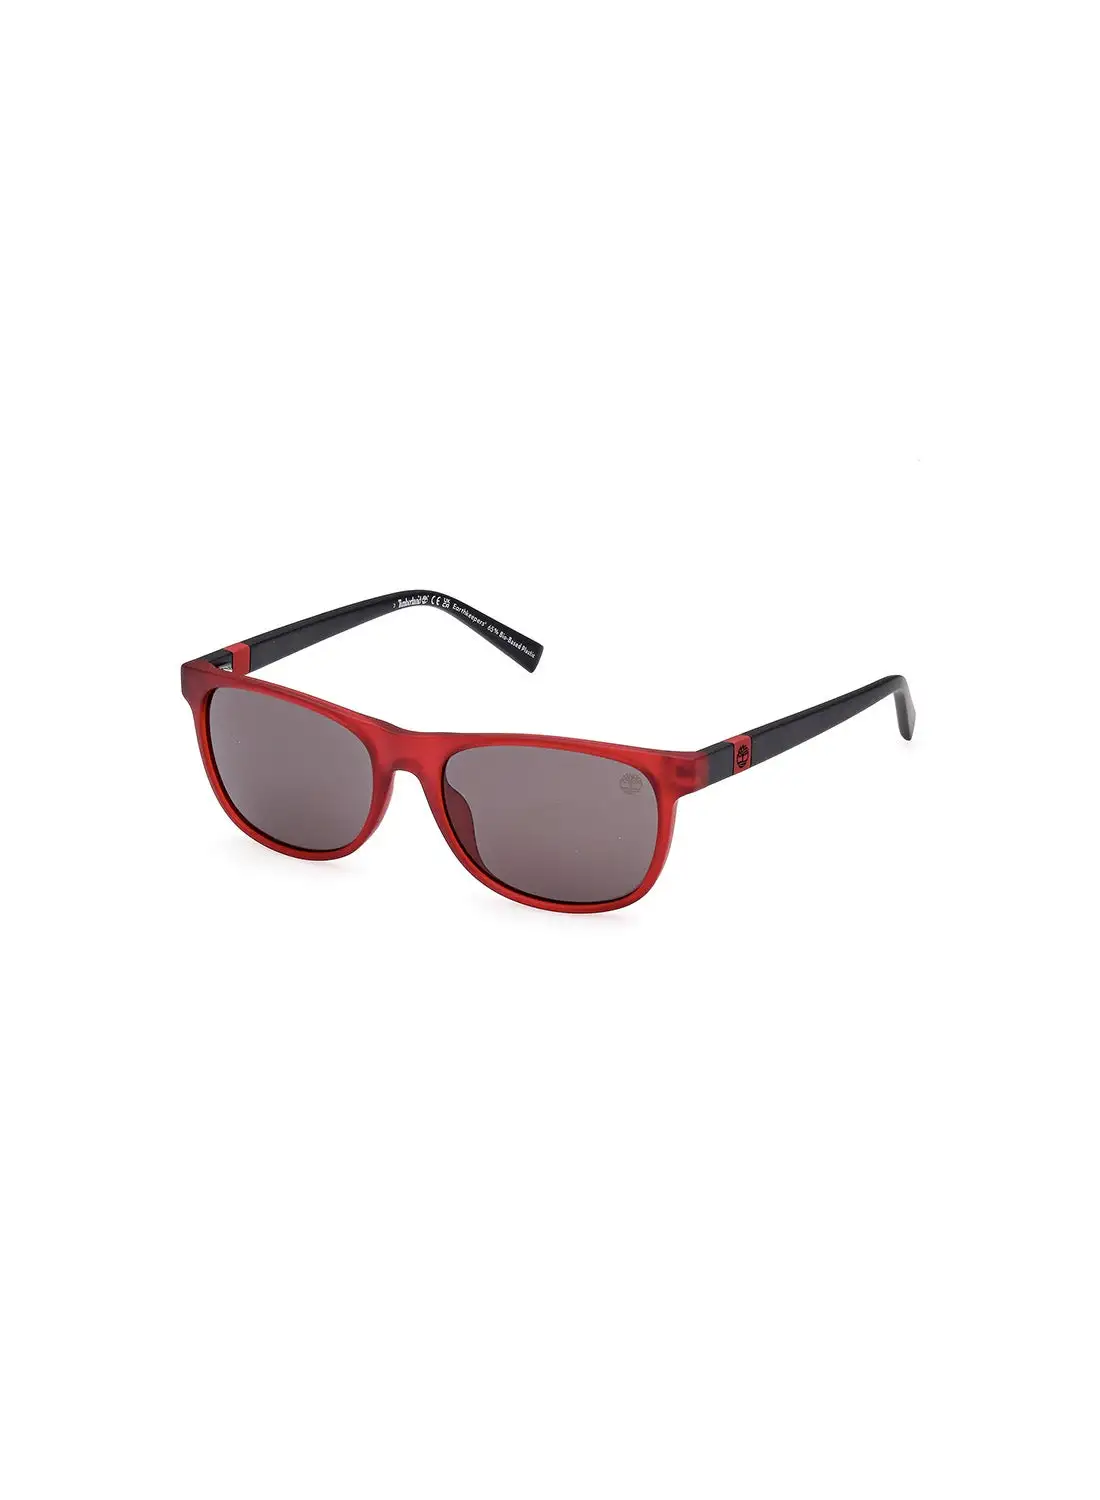 Timberland Men's UV Protection Rectangular Sunglasses - TB932767A52 - Lens Size: 52 Mm